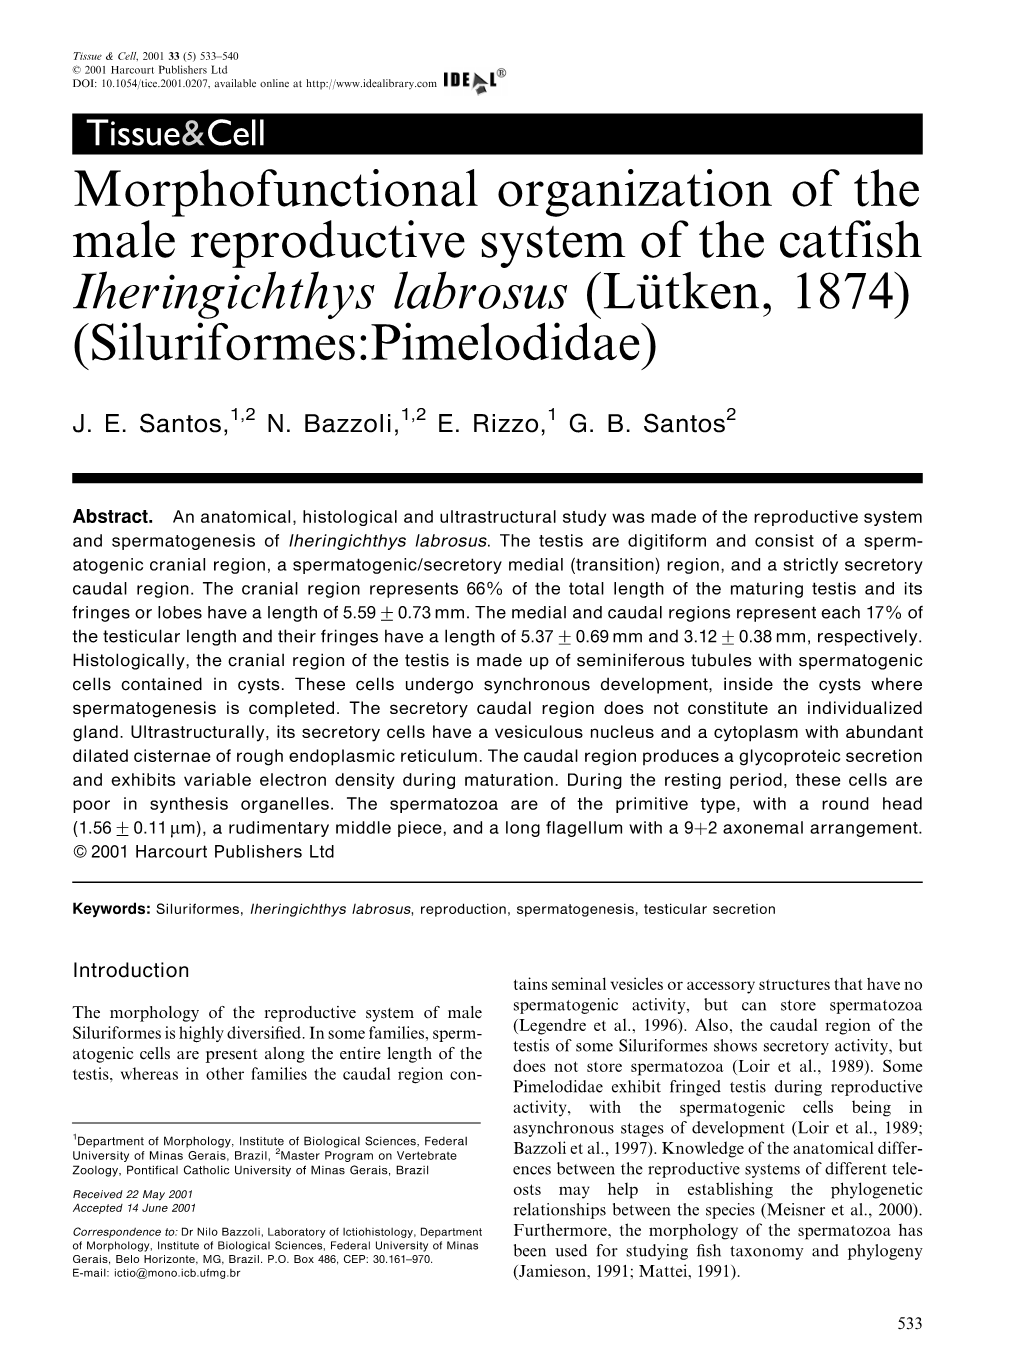 Morphofunctional Organization of the Male Reproductive System of the Catfish Iheringichthys Labrosus (Luètken, 1874) (Siluriformes:Pimelodidae)